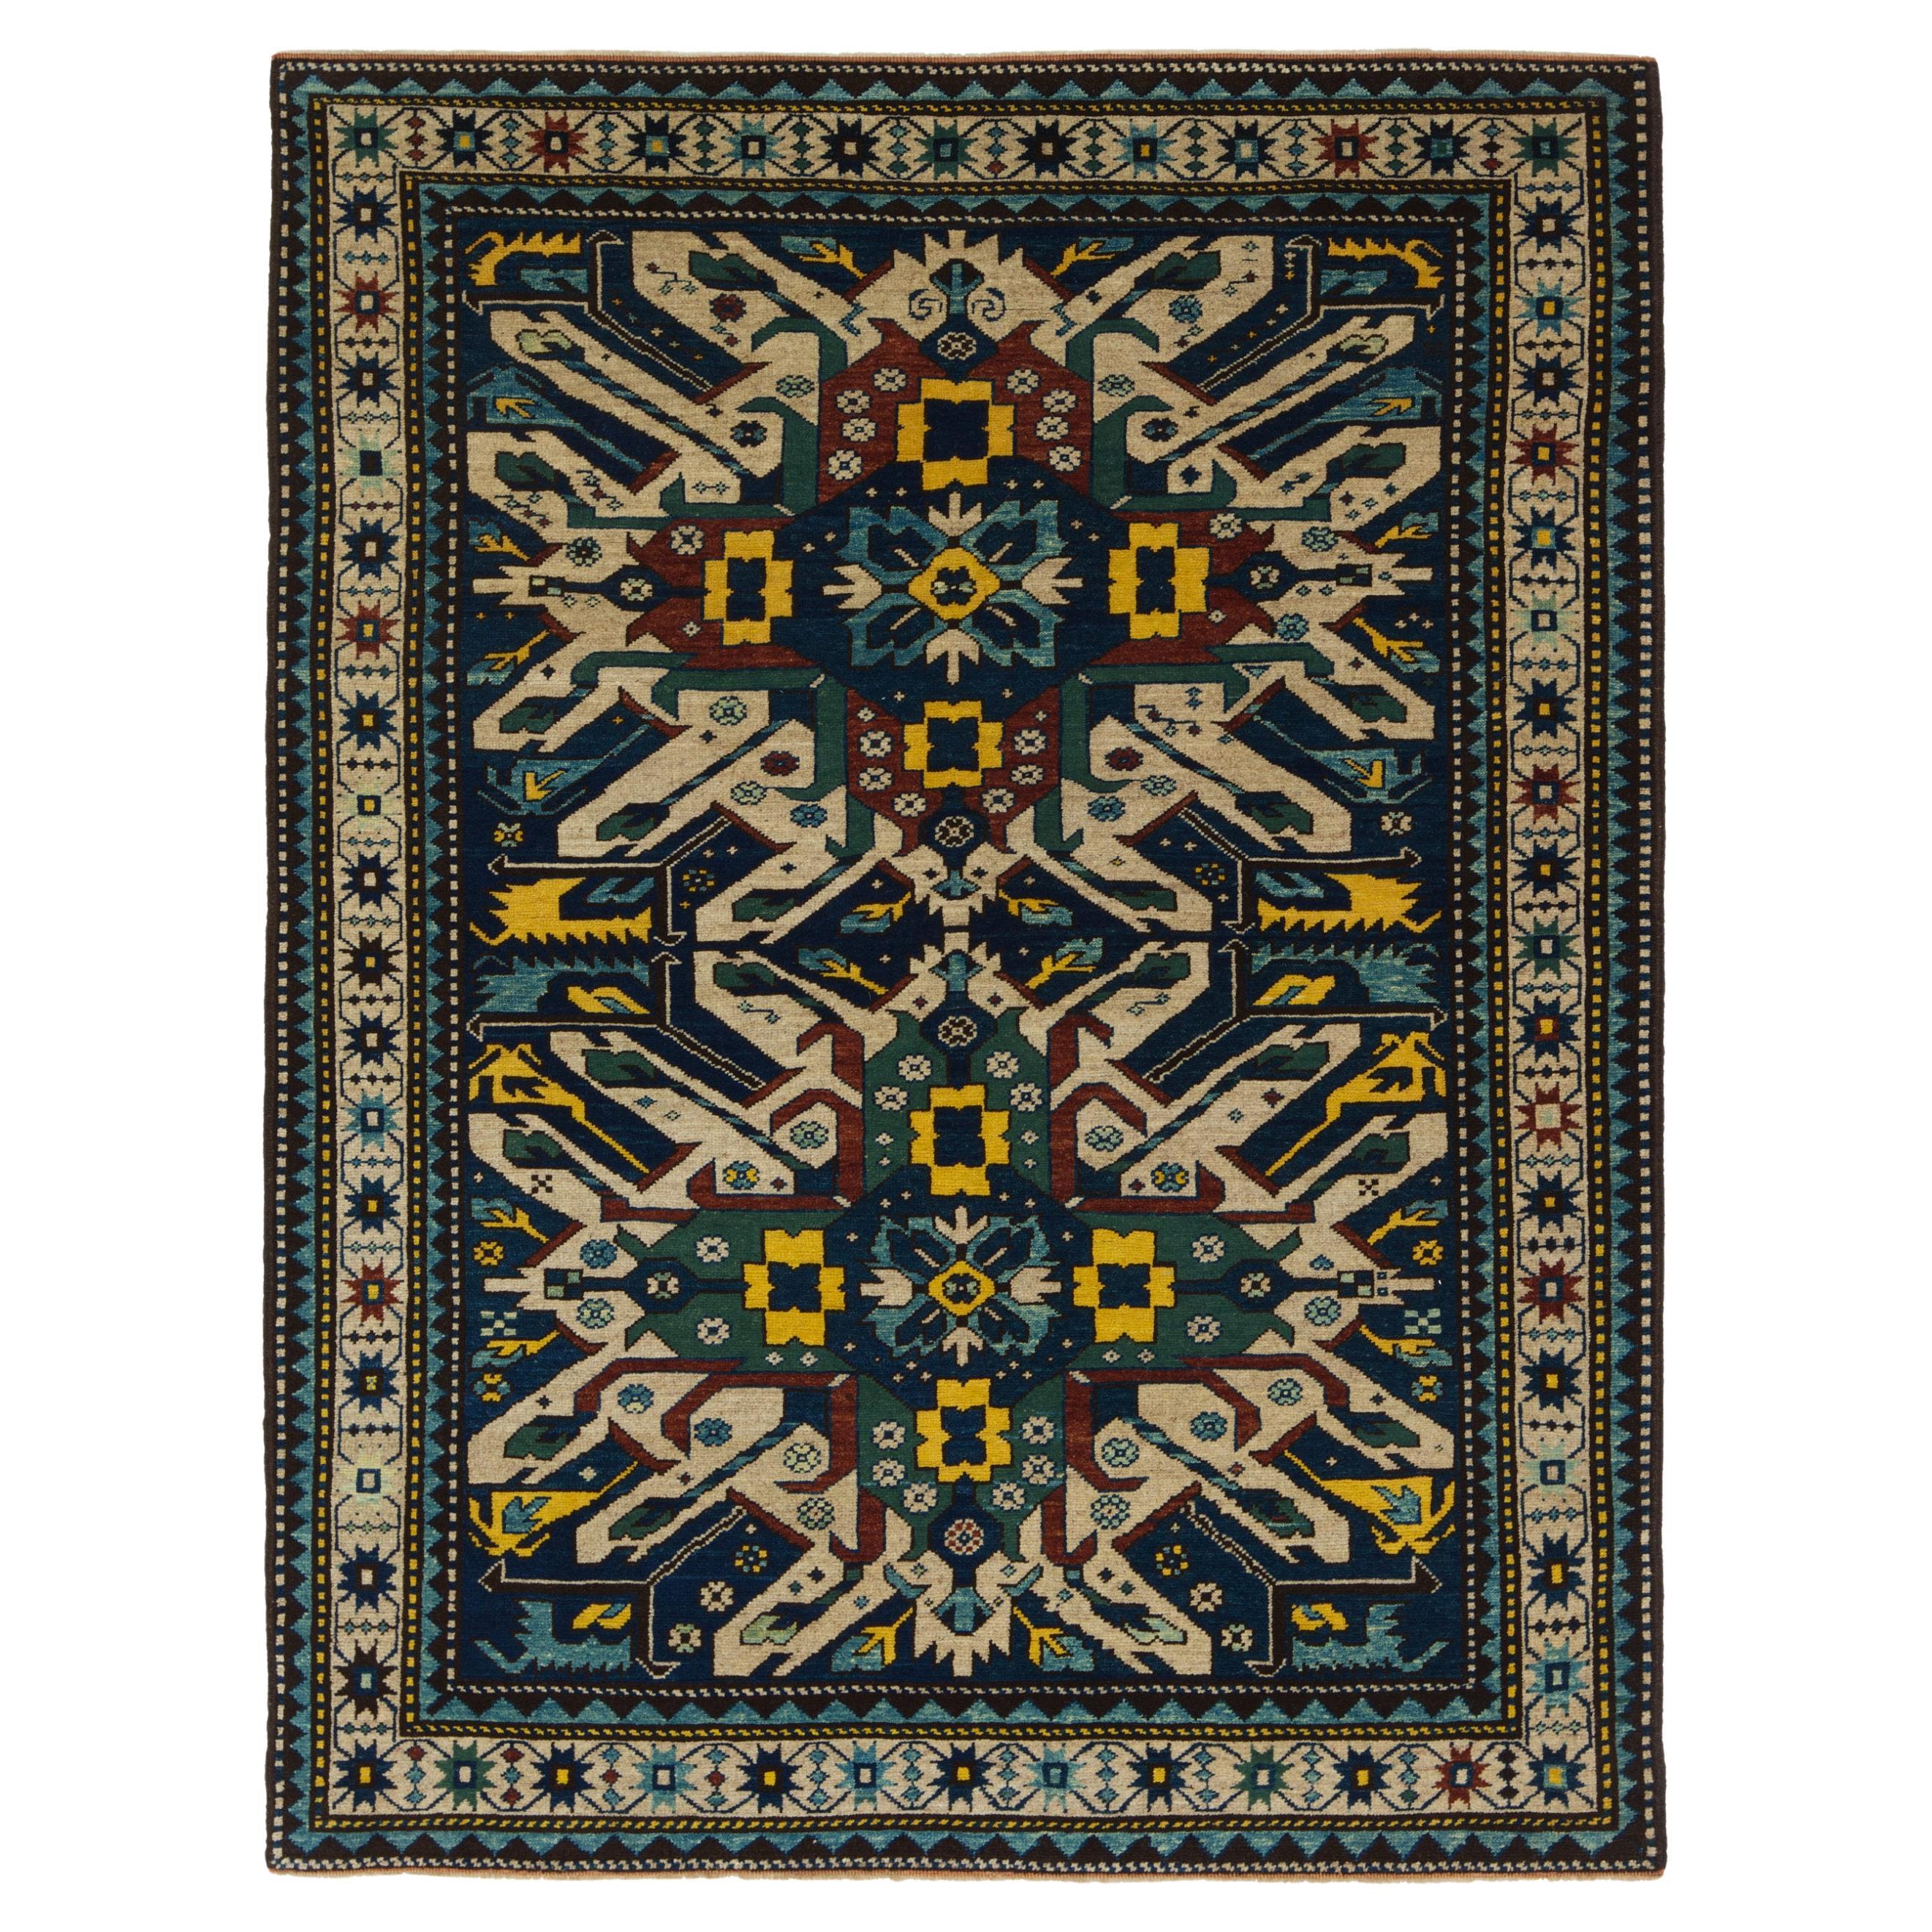 Ararat Rugs Chelaberd Karabakh Rug Antique Caucasian Revival Carpet Natural Dyed For Sale